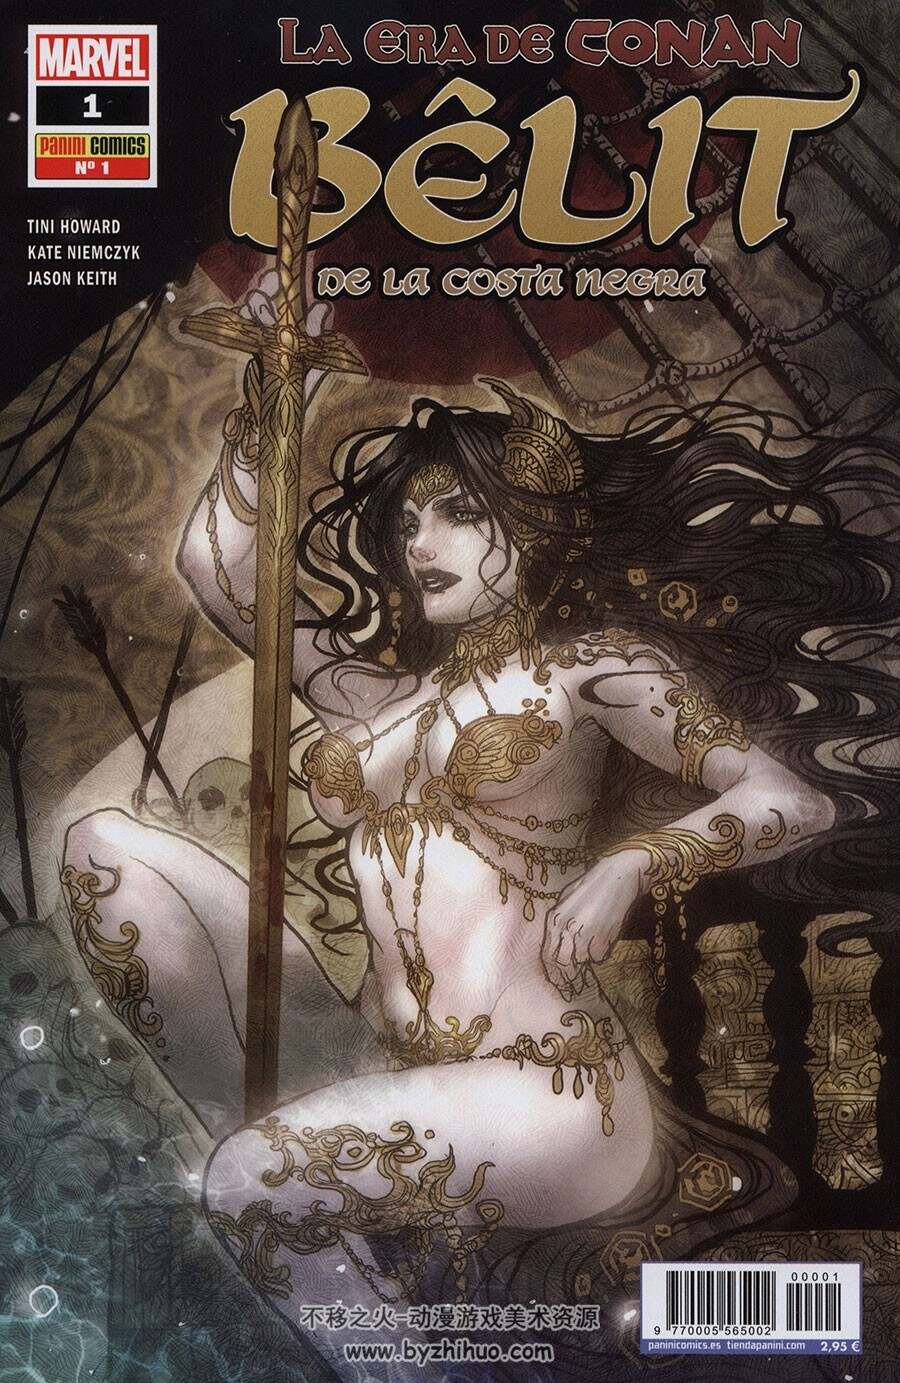 La Era de Conan - Bêlit de la Costa Negra 第1册 Tini Howard - Kate Niemczyk